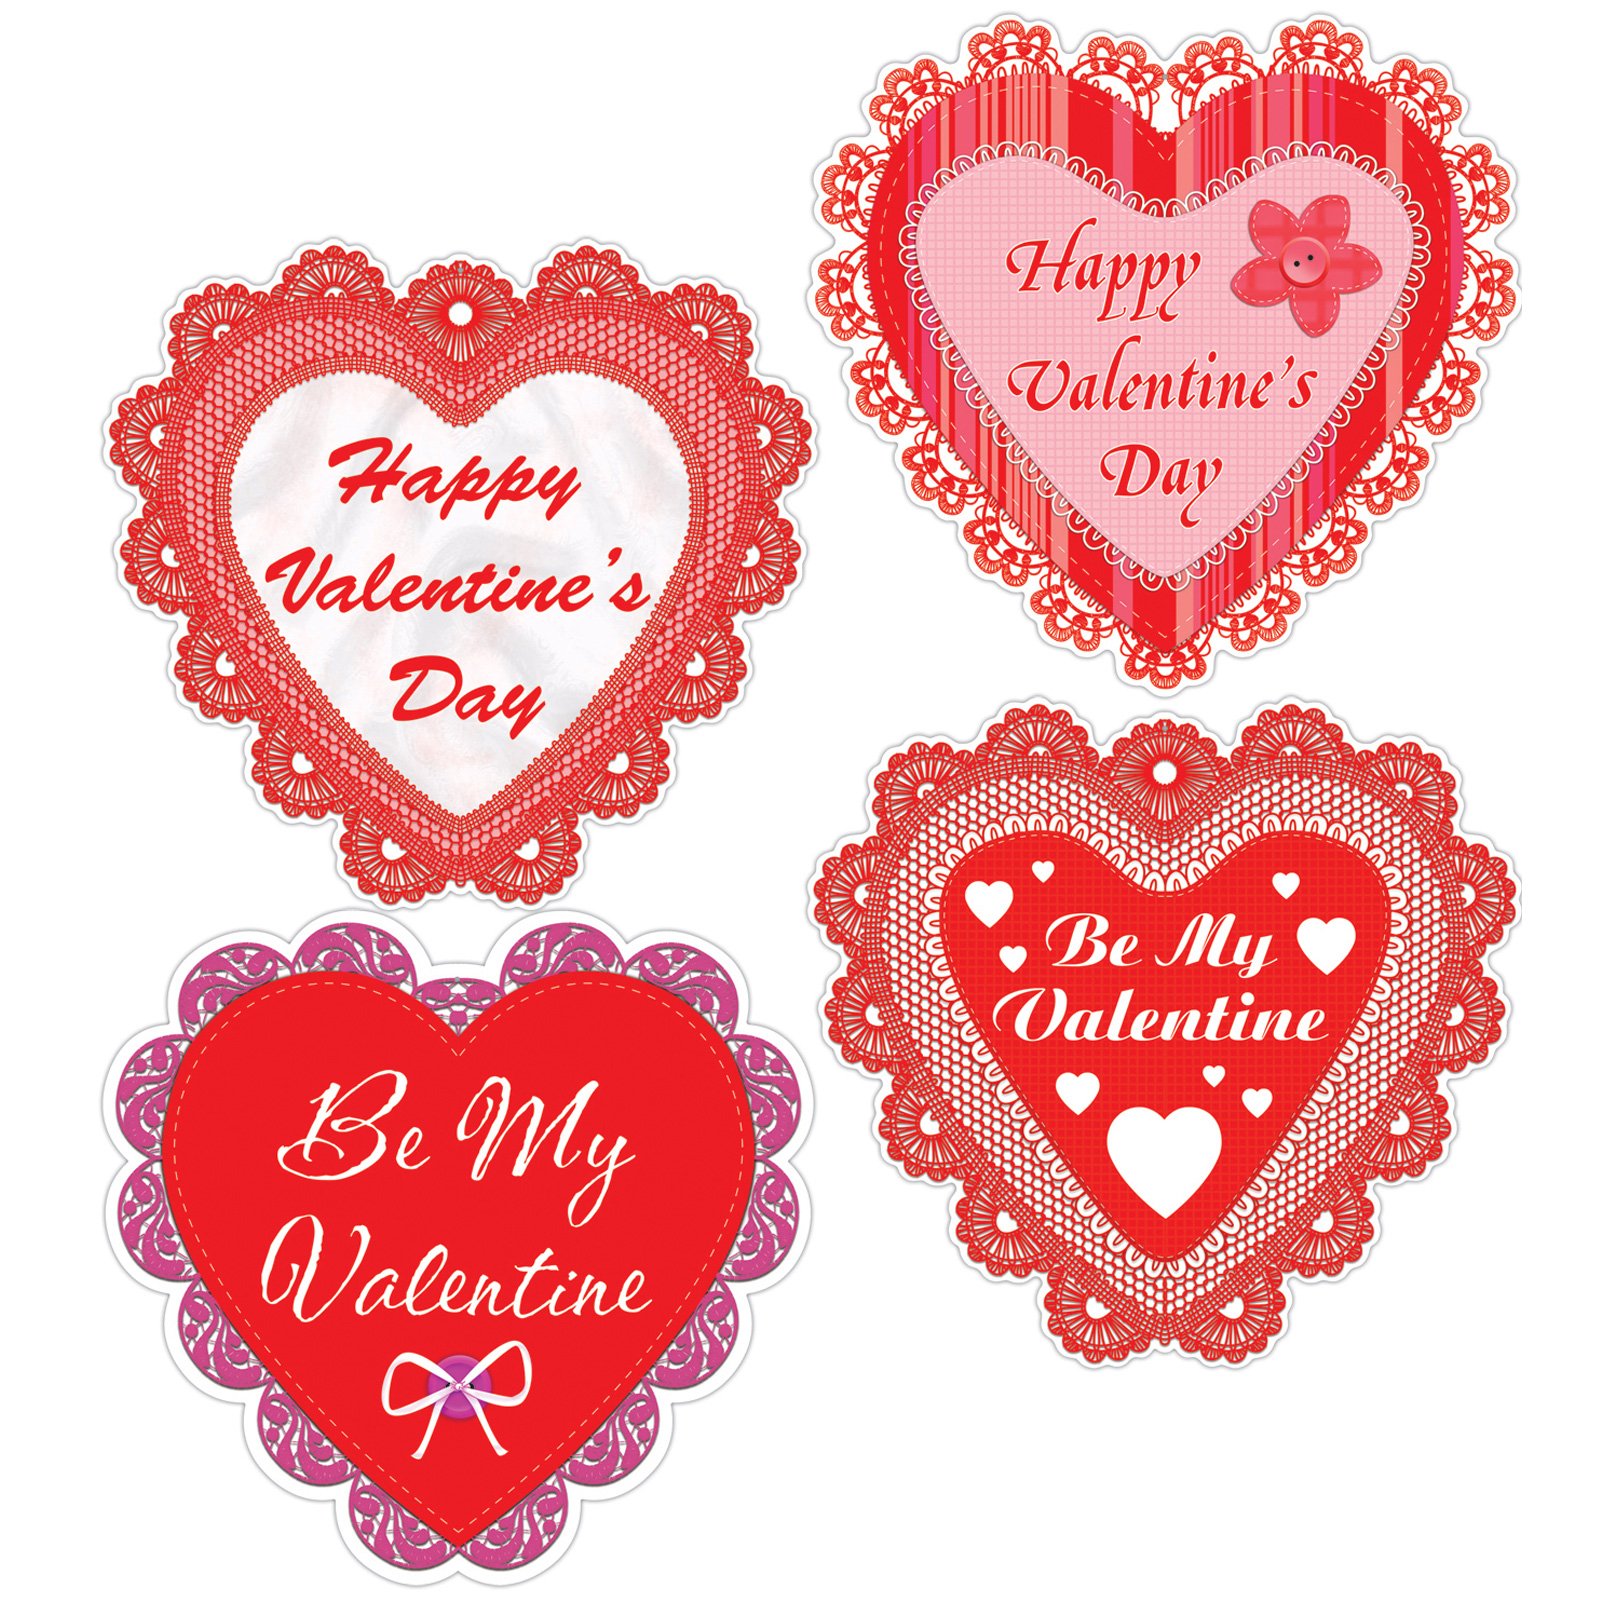 Happy Valentine S Day Lace Hearts Cutouts   4 Count